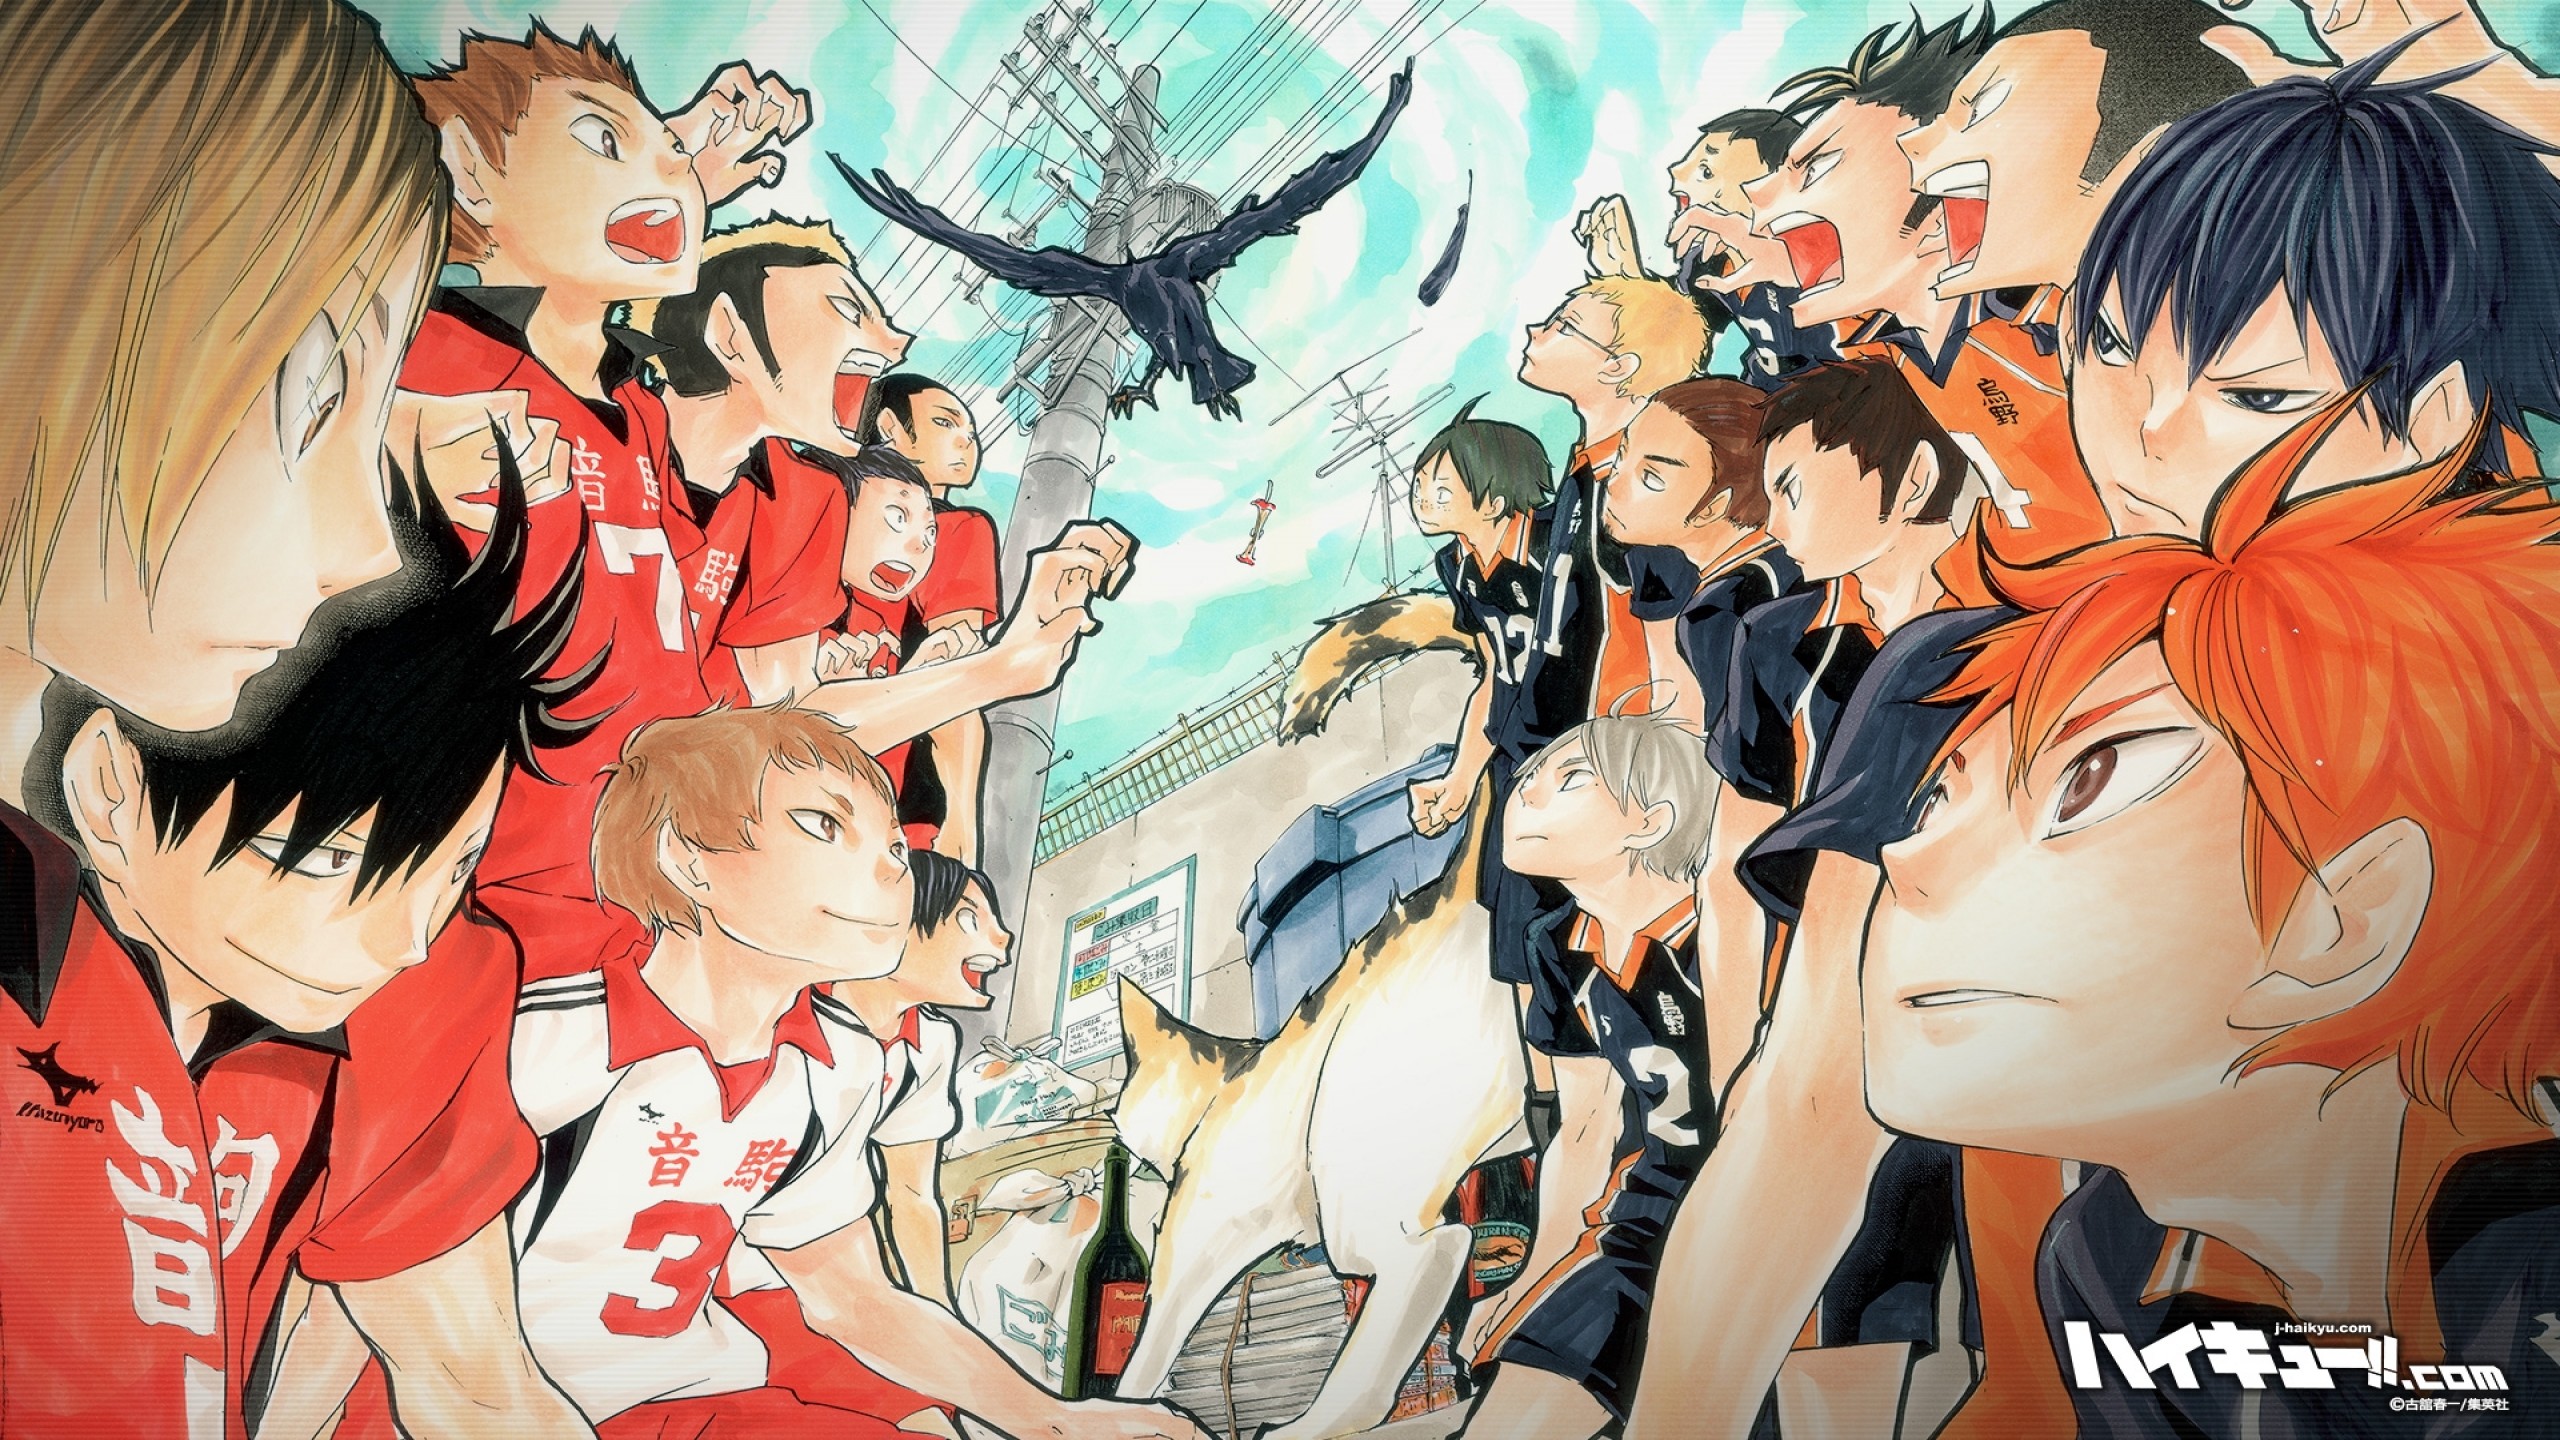 14+ Haikyuu!! Anime Wallpaper Images